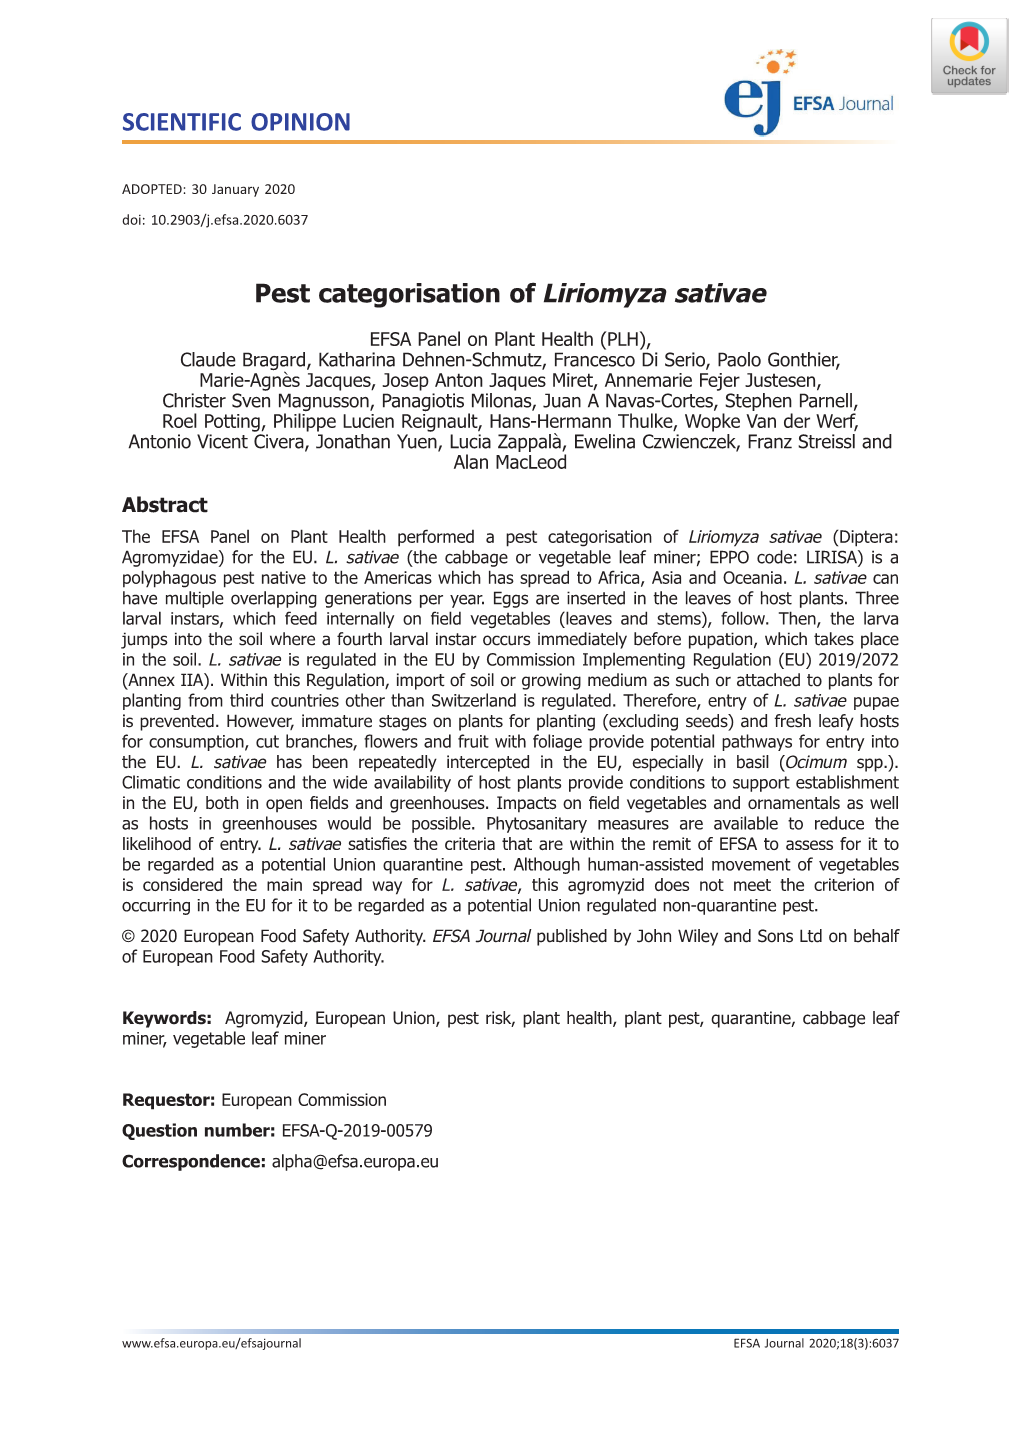 Pest Categorisation of Liriomyza Sativae